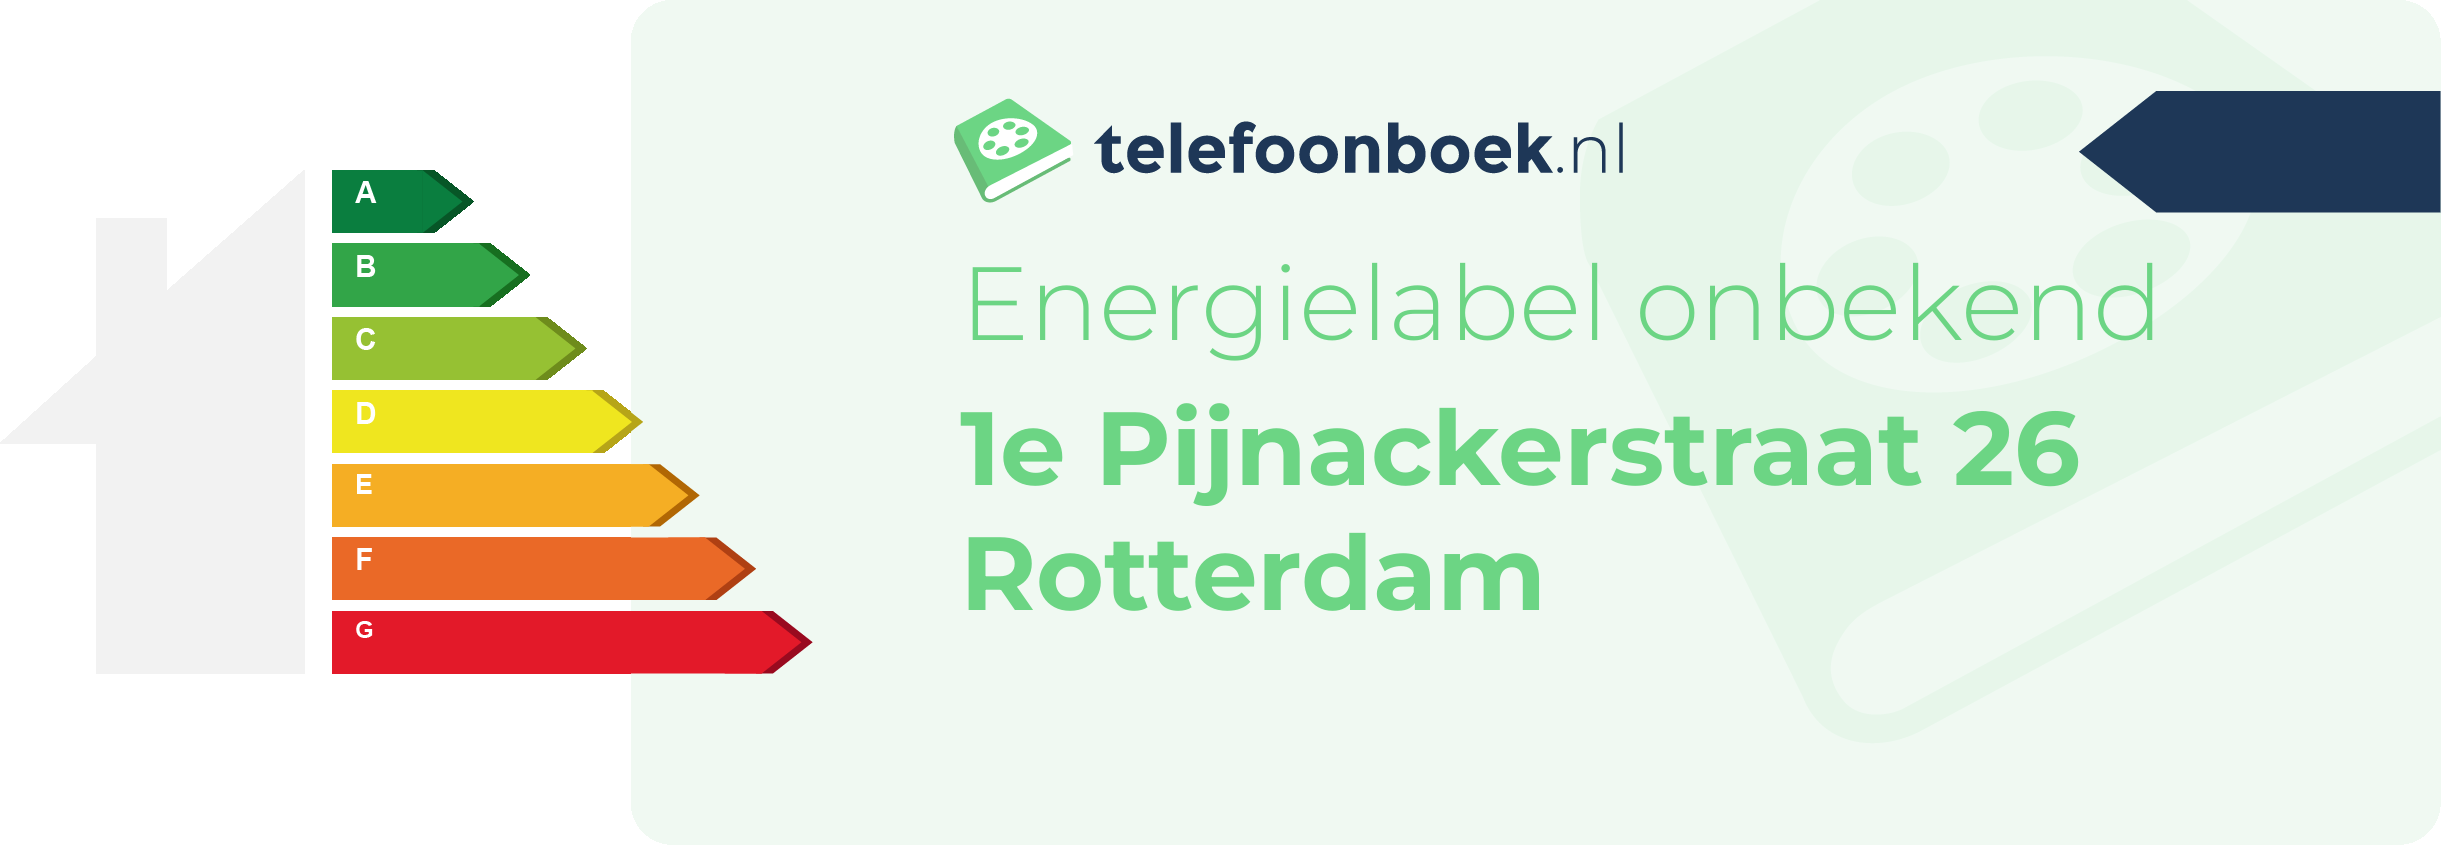 Energielabel 1e Pijnackerstraat 26 Rotterdam